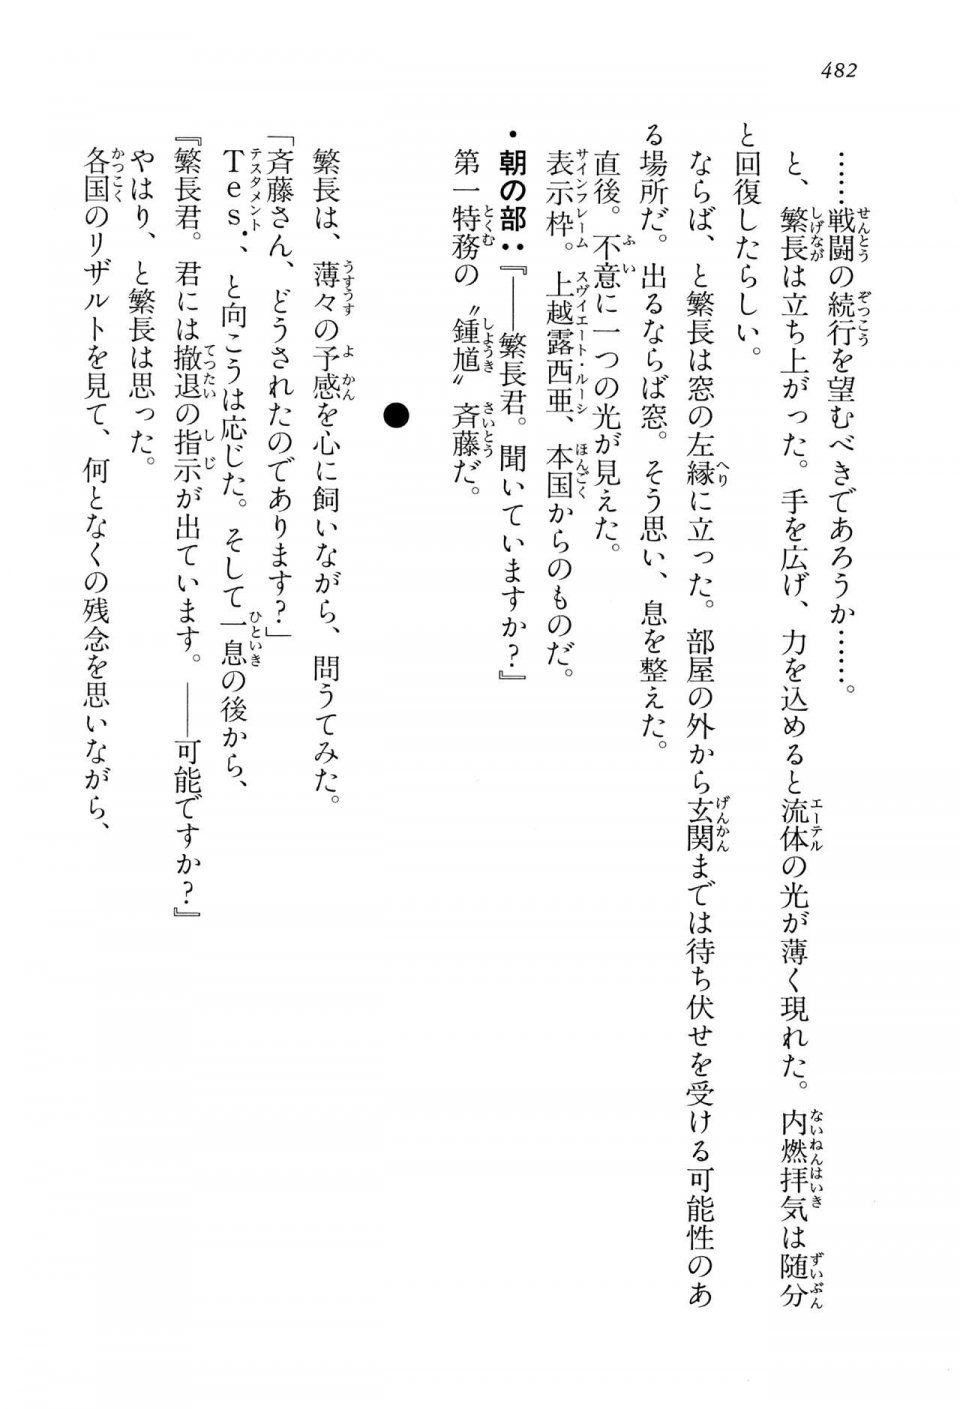 Kyoukai Senjou no Horizon LN Vol 15(6C) Part 1 - Photo #482